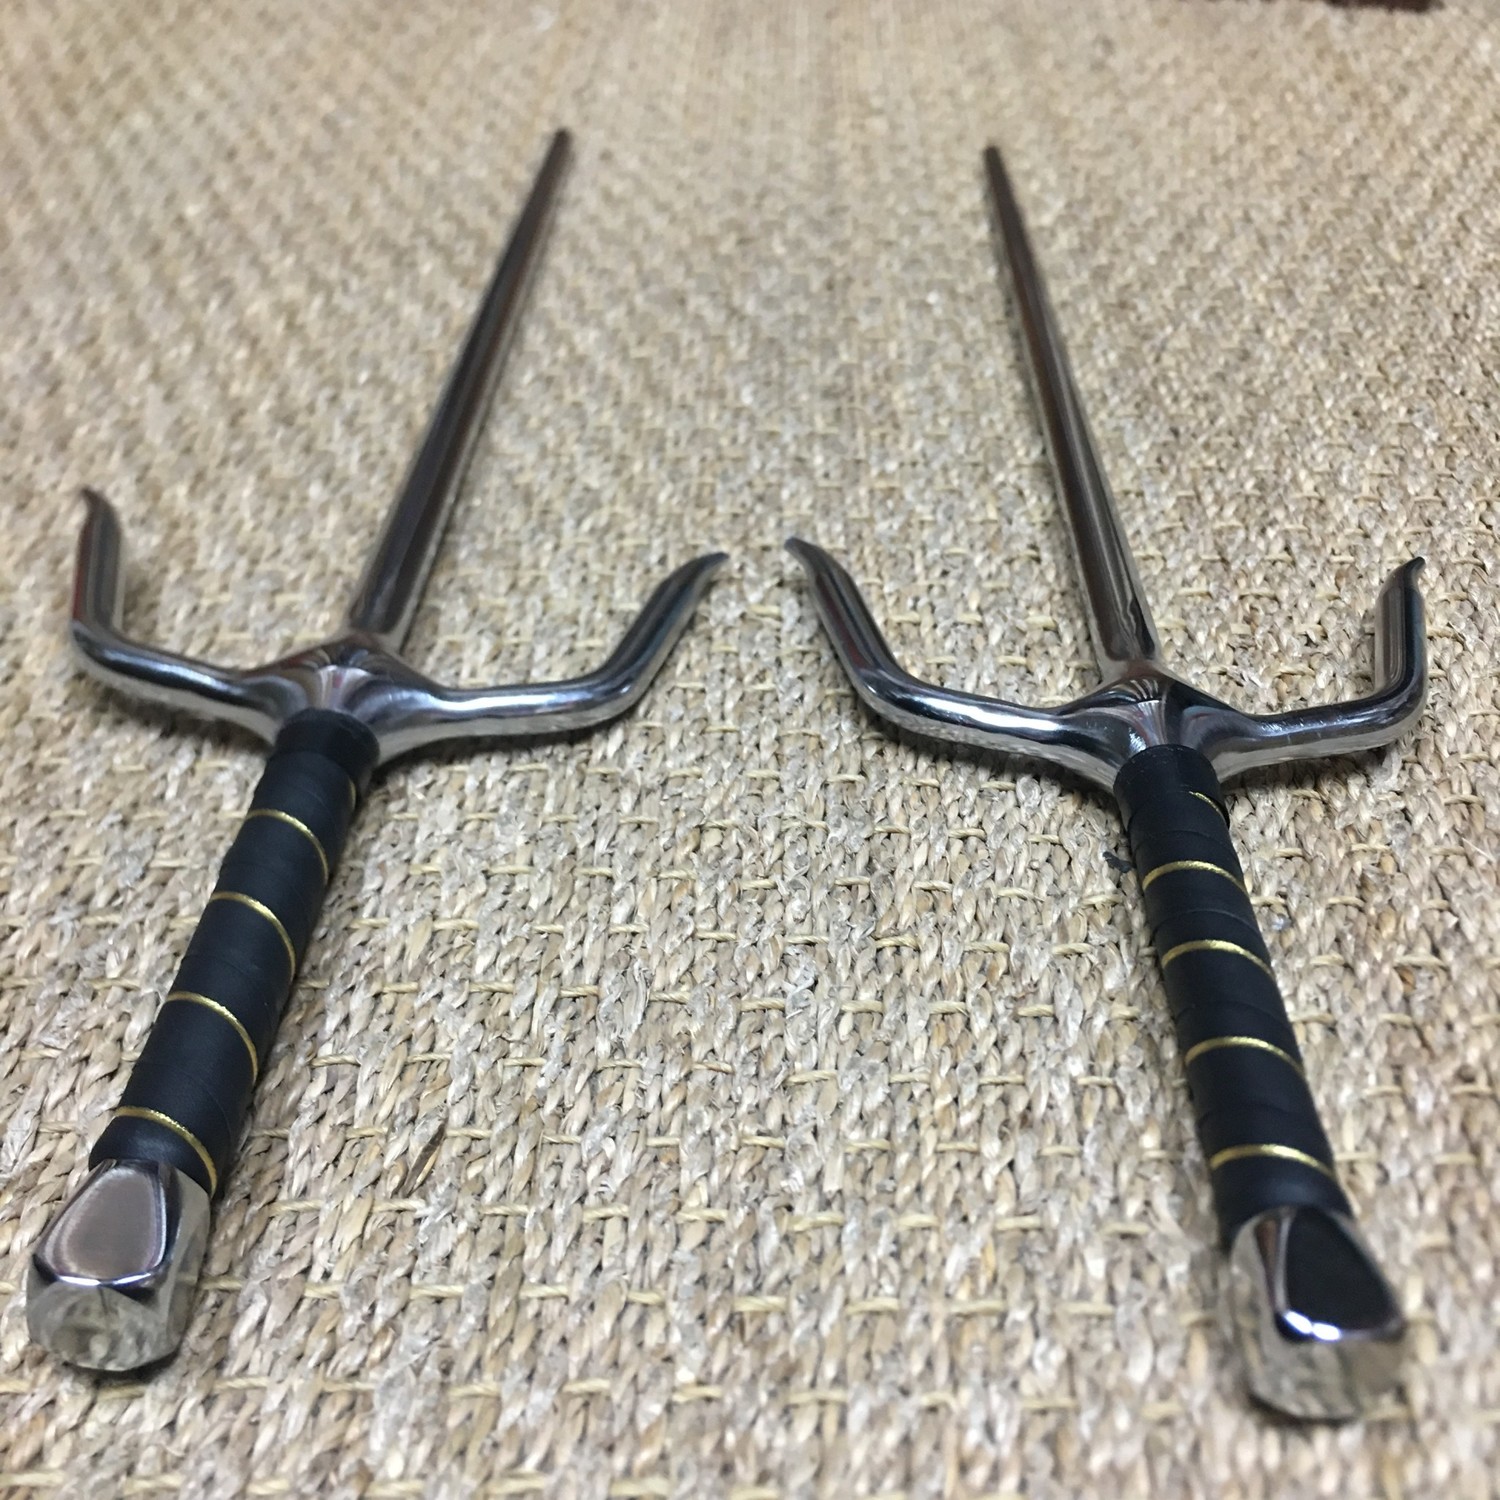 Octagonal Sai Daggers Are A Traditional Okinawan Weapon Enso Martial Arts Shop Bristol 2101